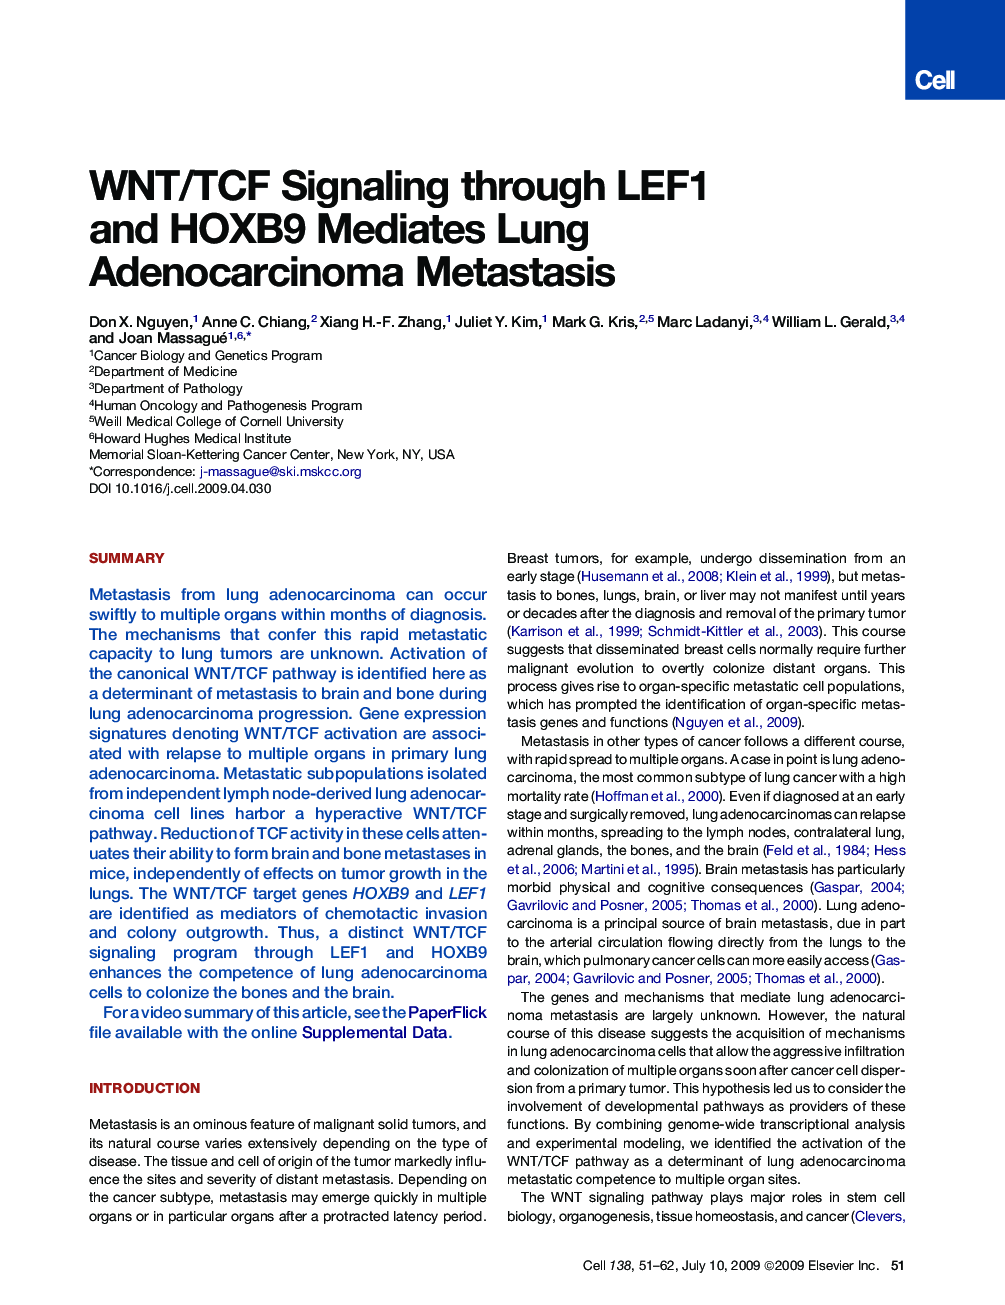 WNT/TCF Signaling through LEF1 and HOXB9 Mediates Lung Adenocarcinoma Metastasis